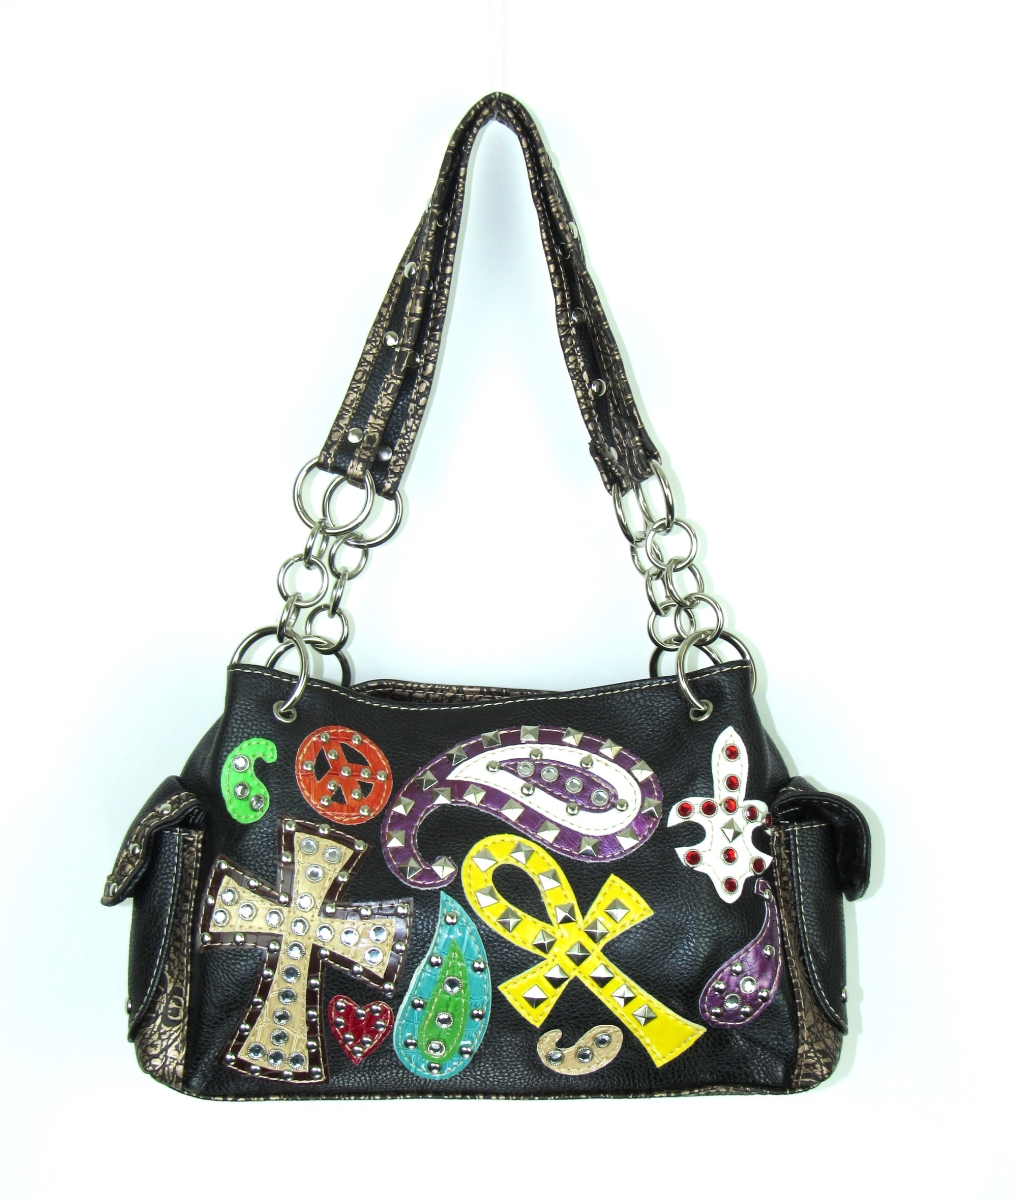 No.pe-893 Bk Ladies Faux Leather Peace & Paisley Handbag, Black